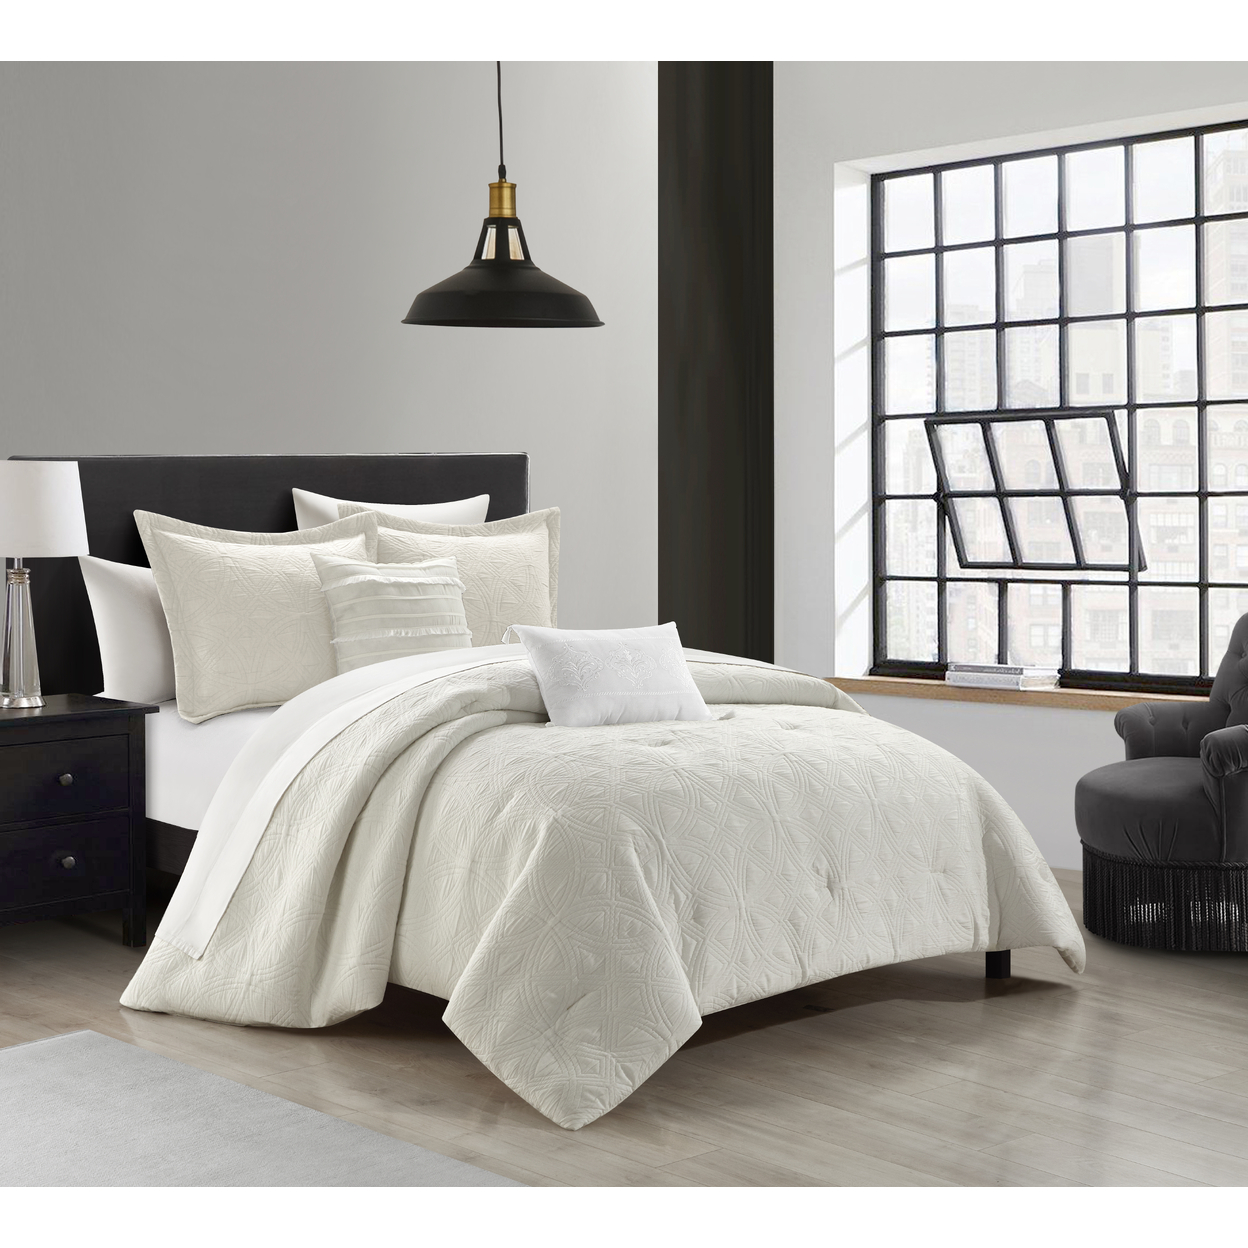 Bartista 5 Piece Cotton Blend Comforter Set Jacquard - Grey, King